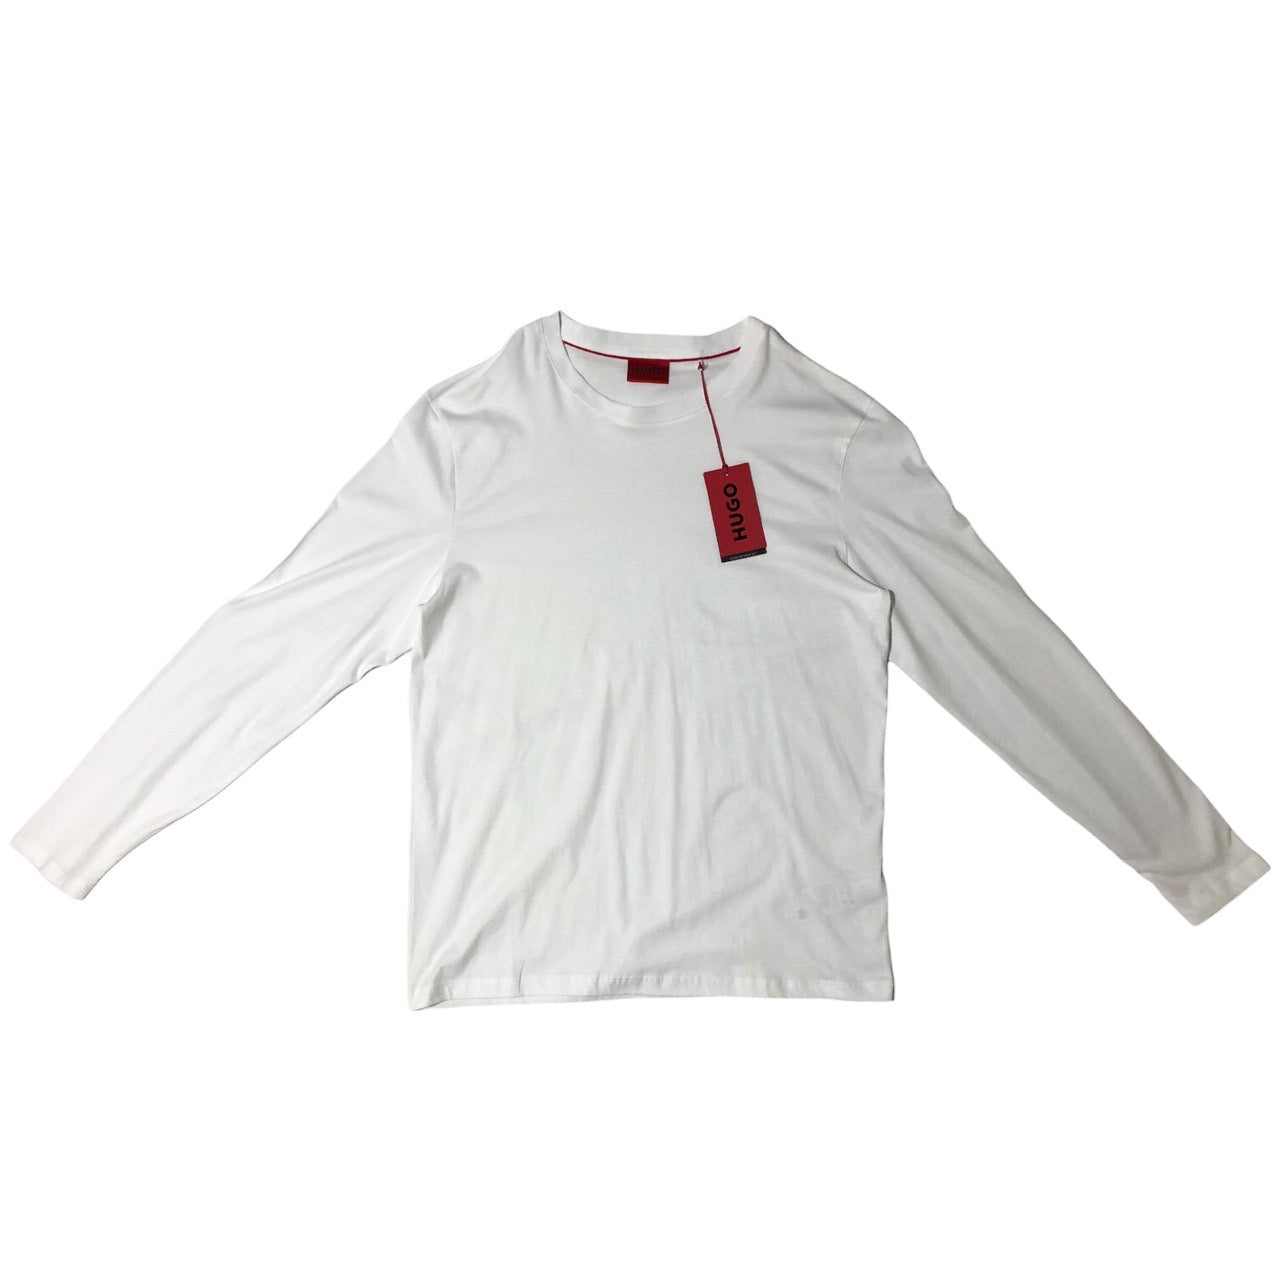 HUGO BOSS(ヒューゴボス) ロングスリーブTシャツ コットンジャージー ロゴプリント/ロゴ長袖Tシャツ 4021406673212 M ホワイト